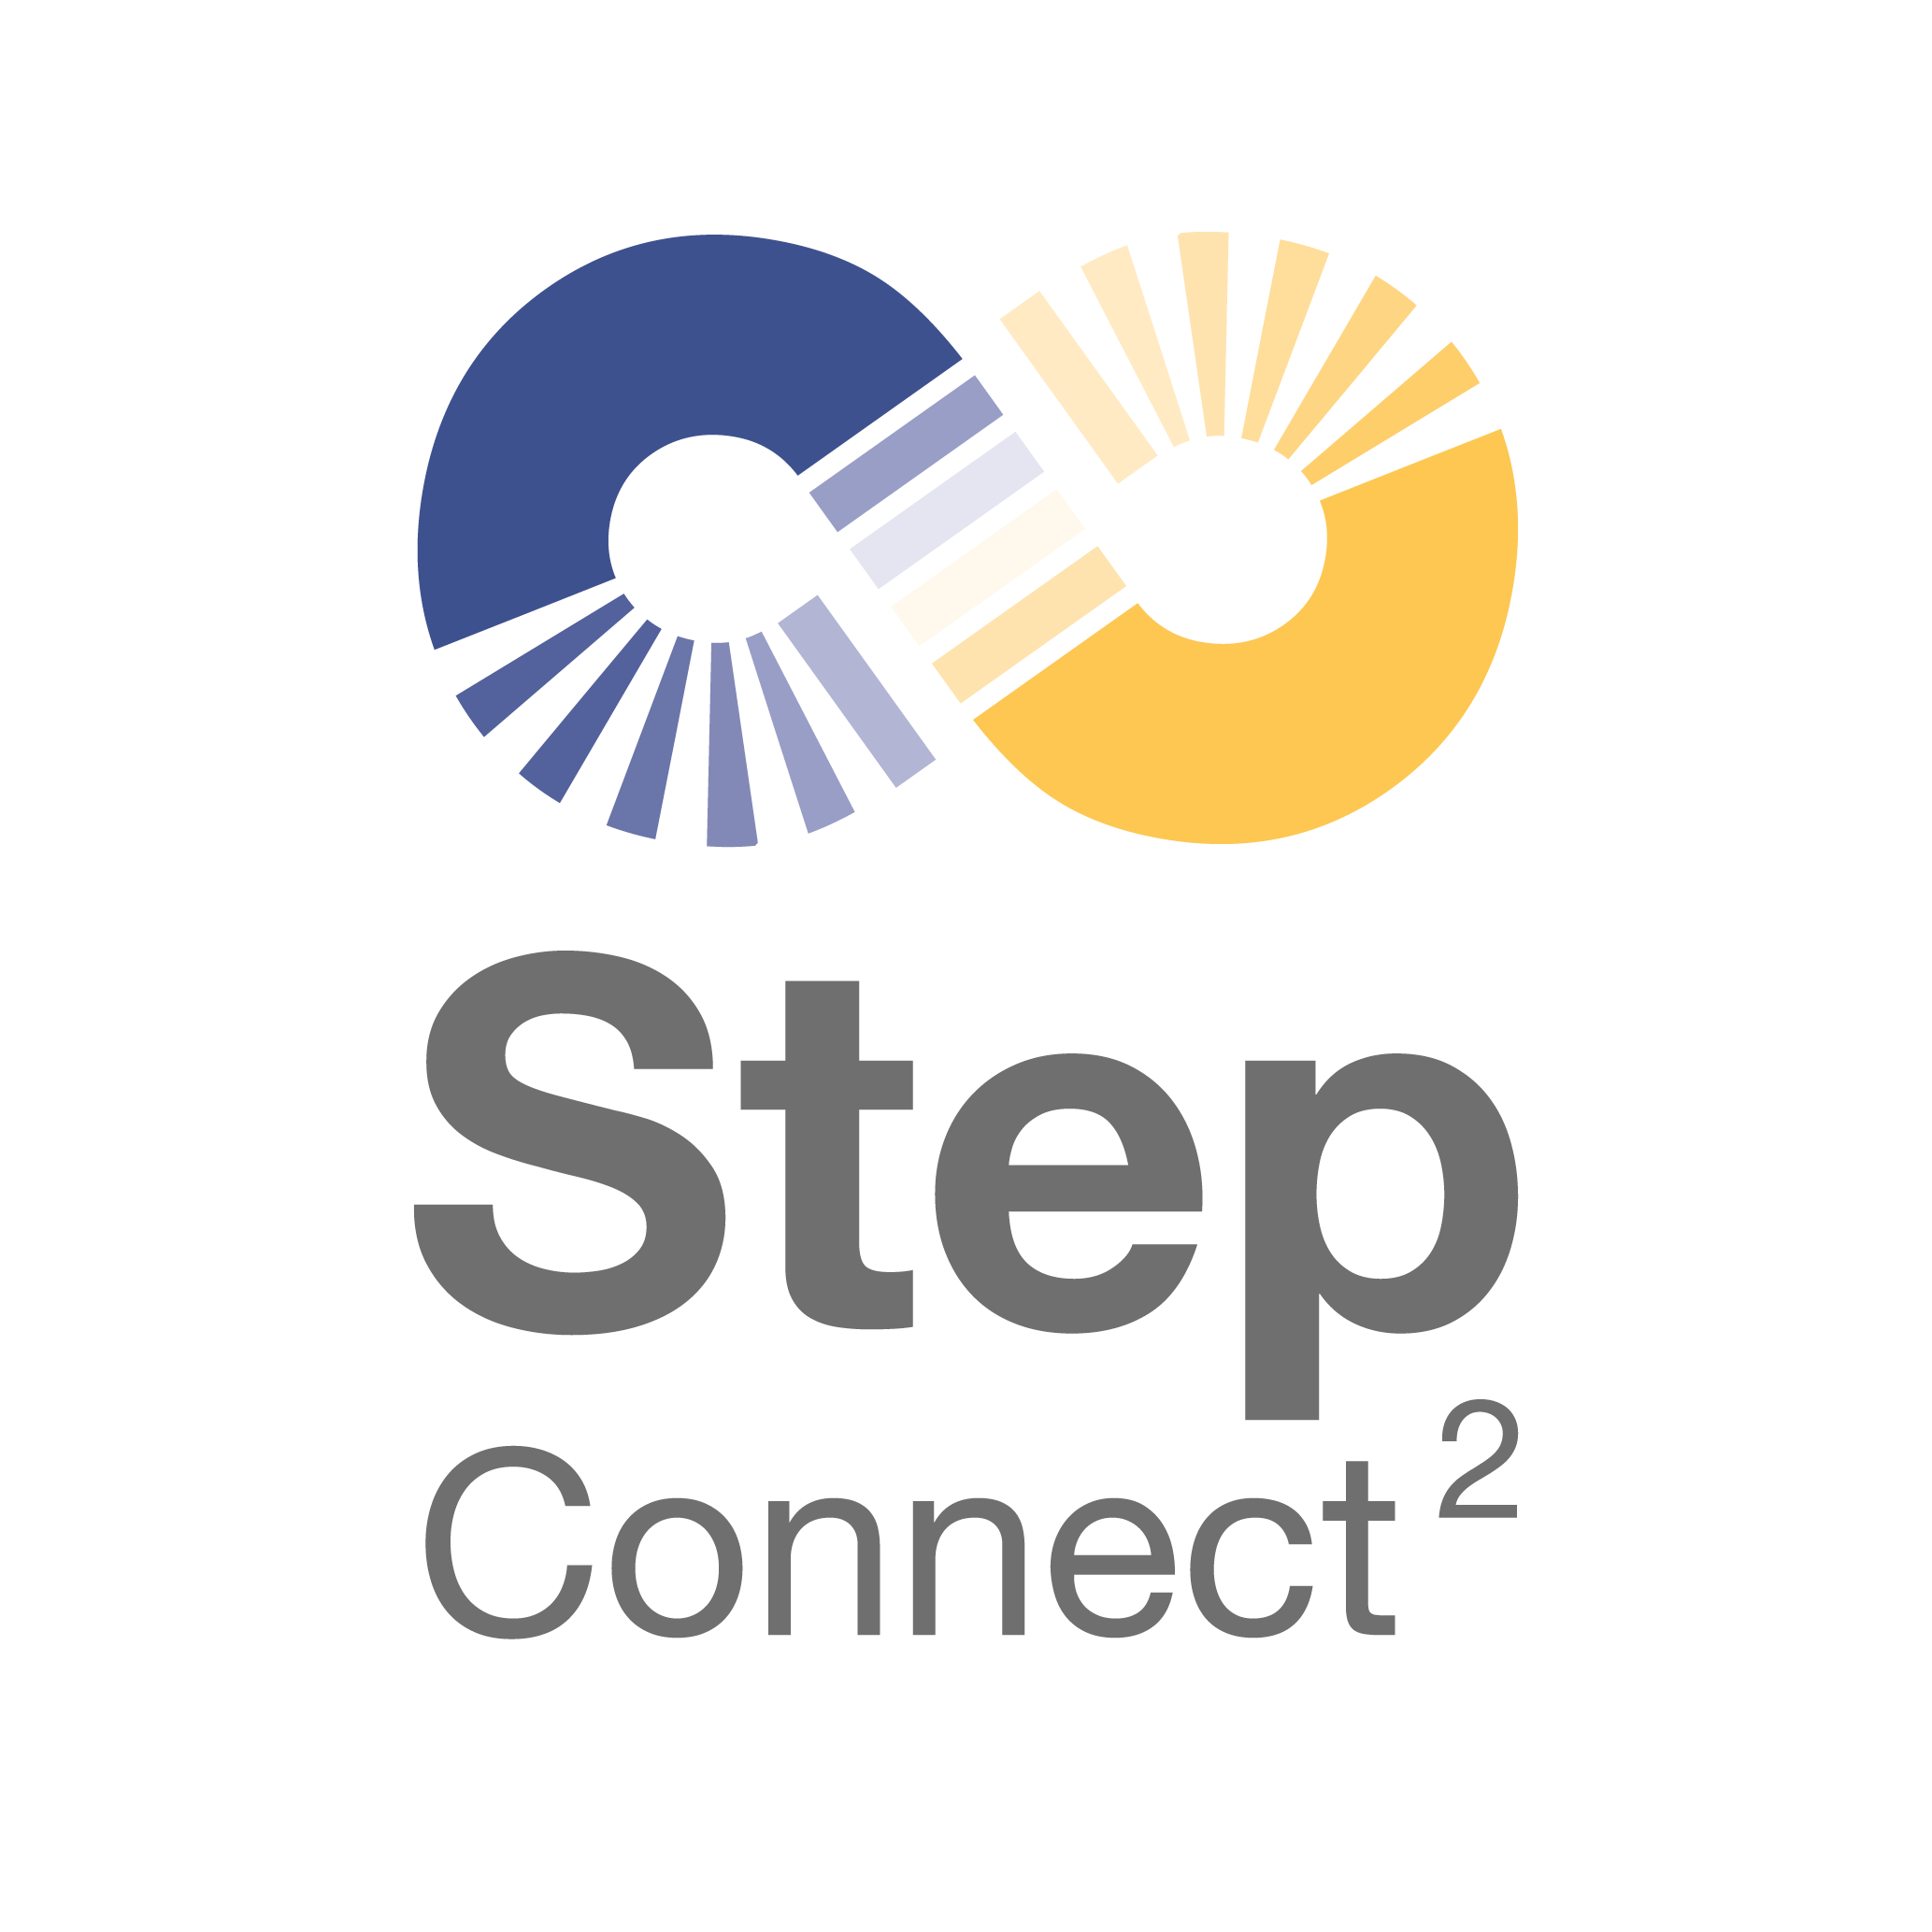 StepConnect2 Ltd